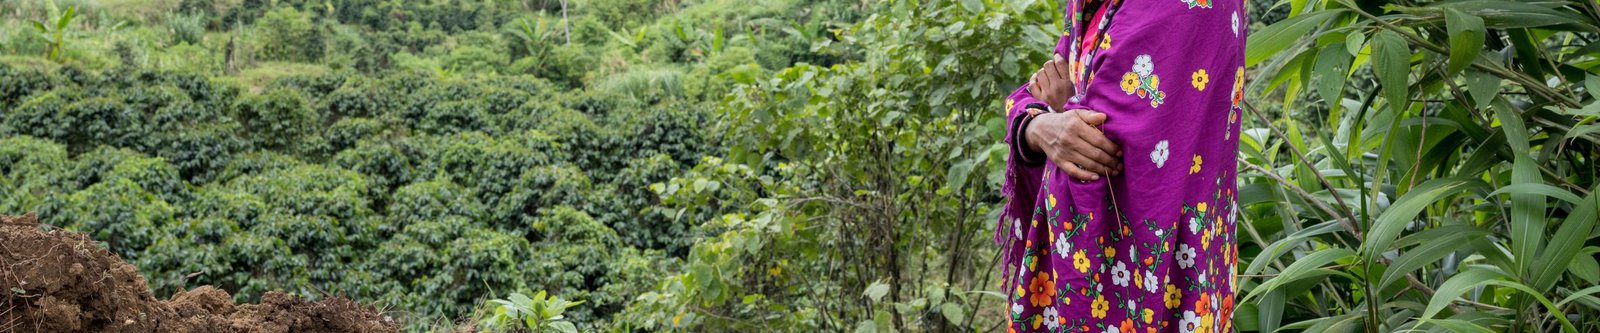 Defenders - Mirivic Danyan overlooking the coffee plantations